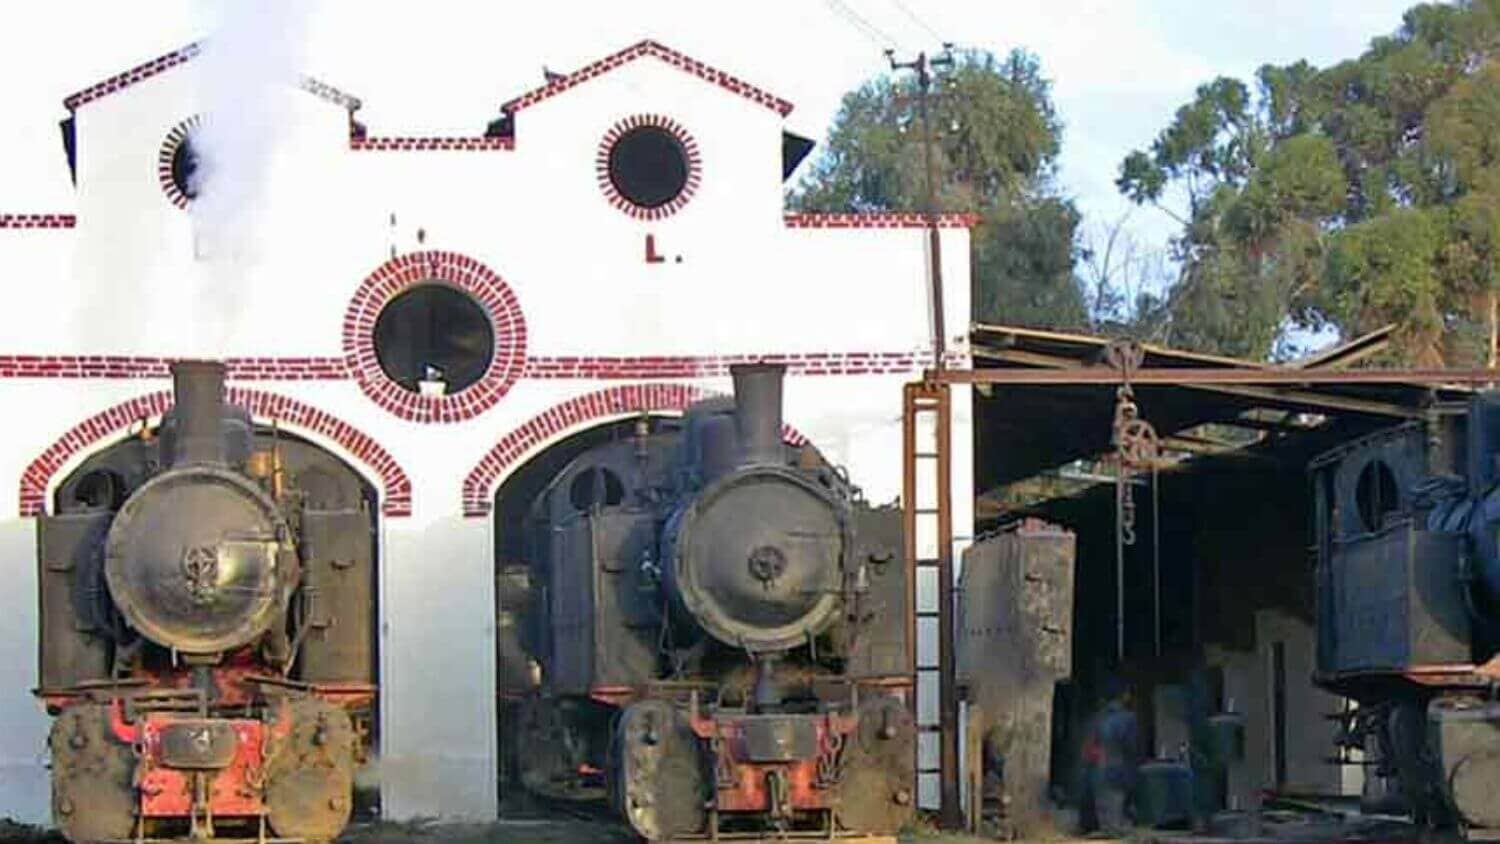 The railway station of Asmara edited